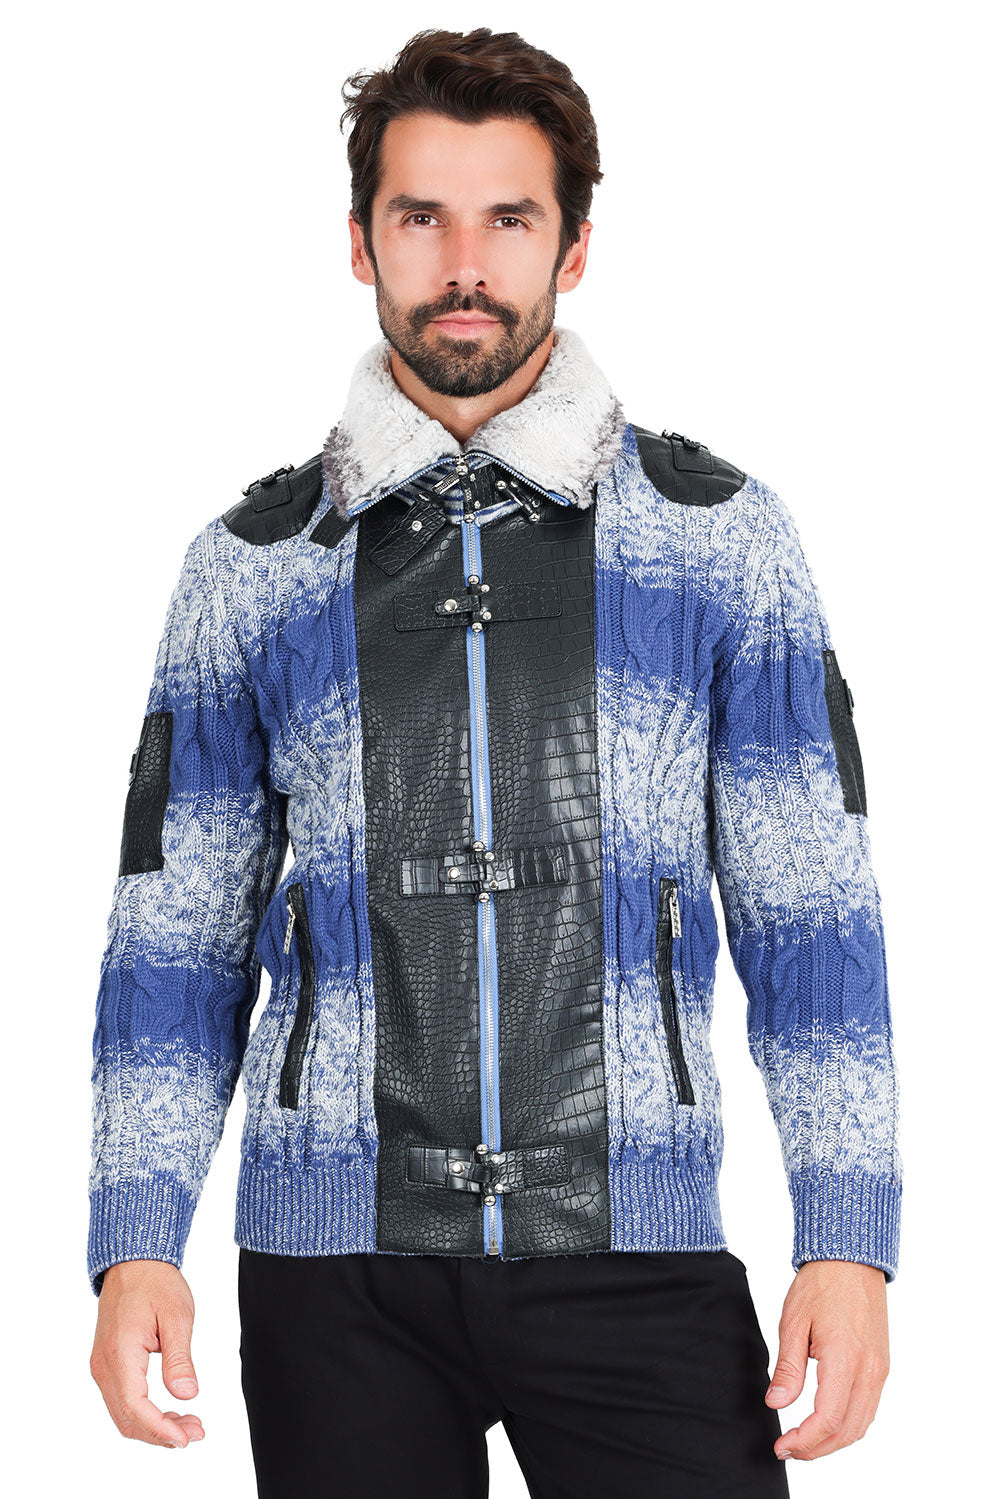 Barabas Men's Zipper Stand collar Animal Print Winter Jacket 2SWZ1 Blue